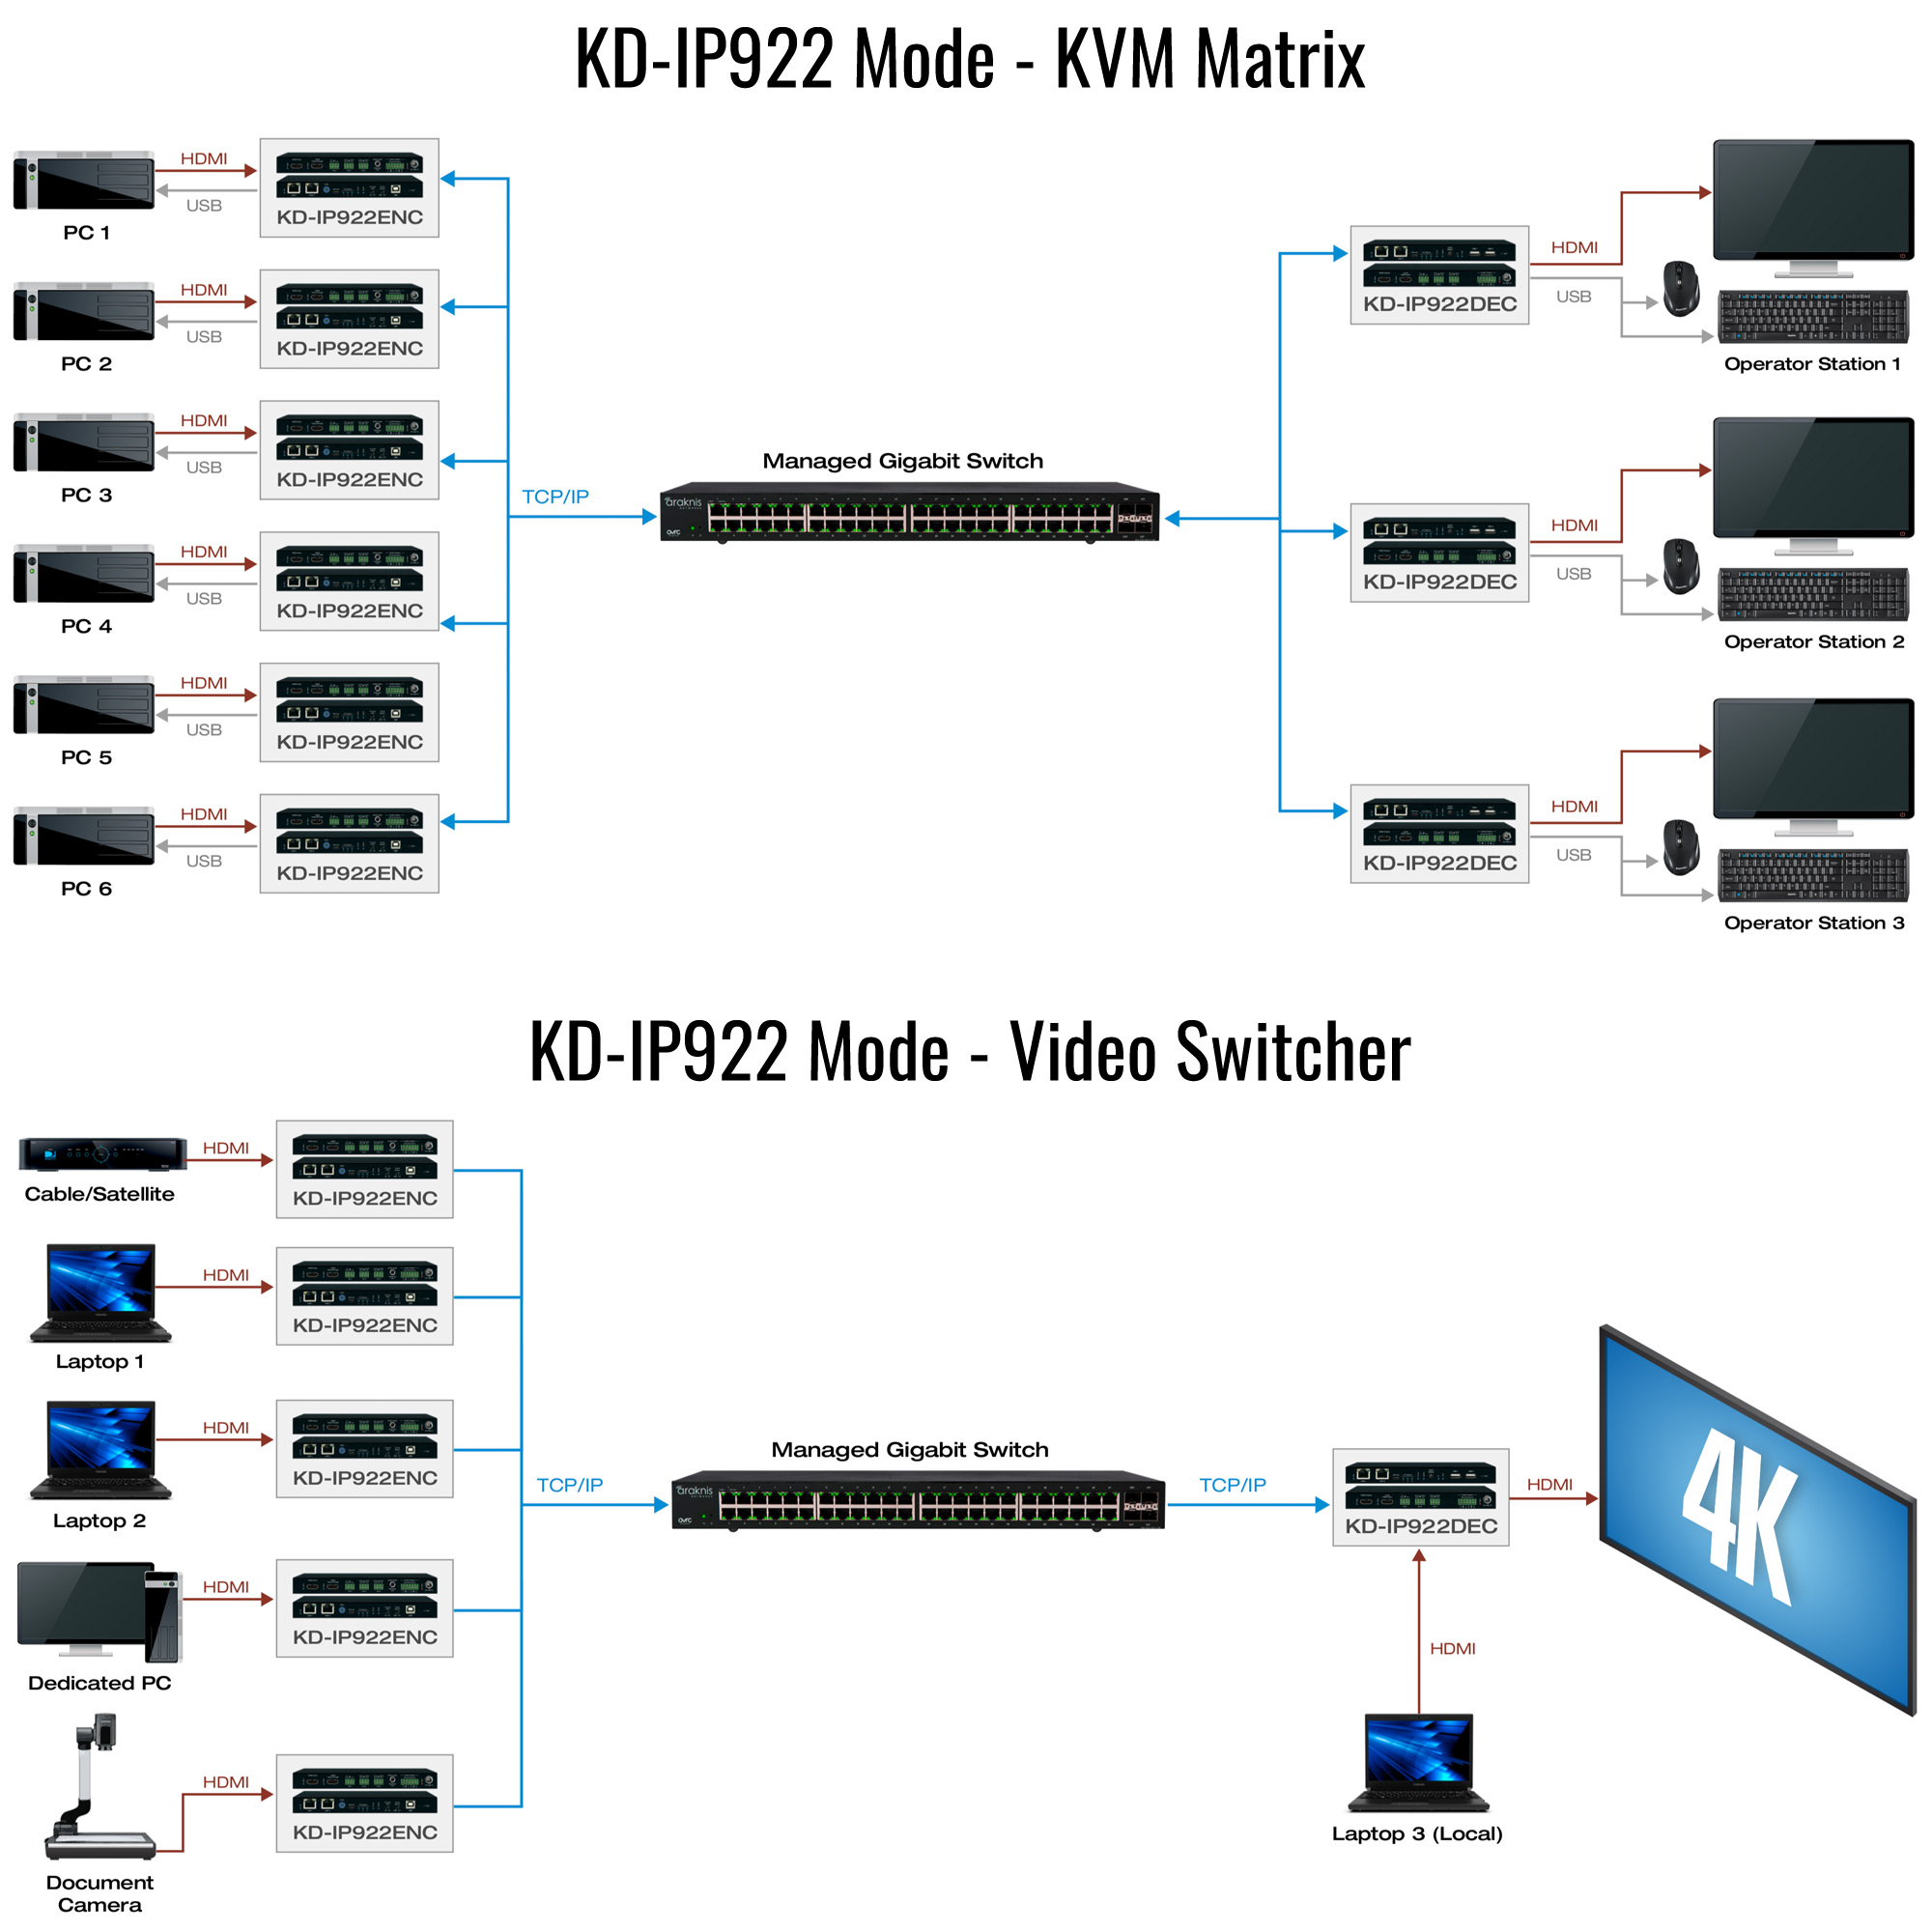 Thumbnail of KD-IP922DEC Modes